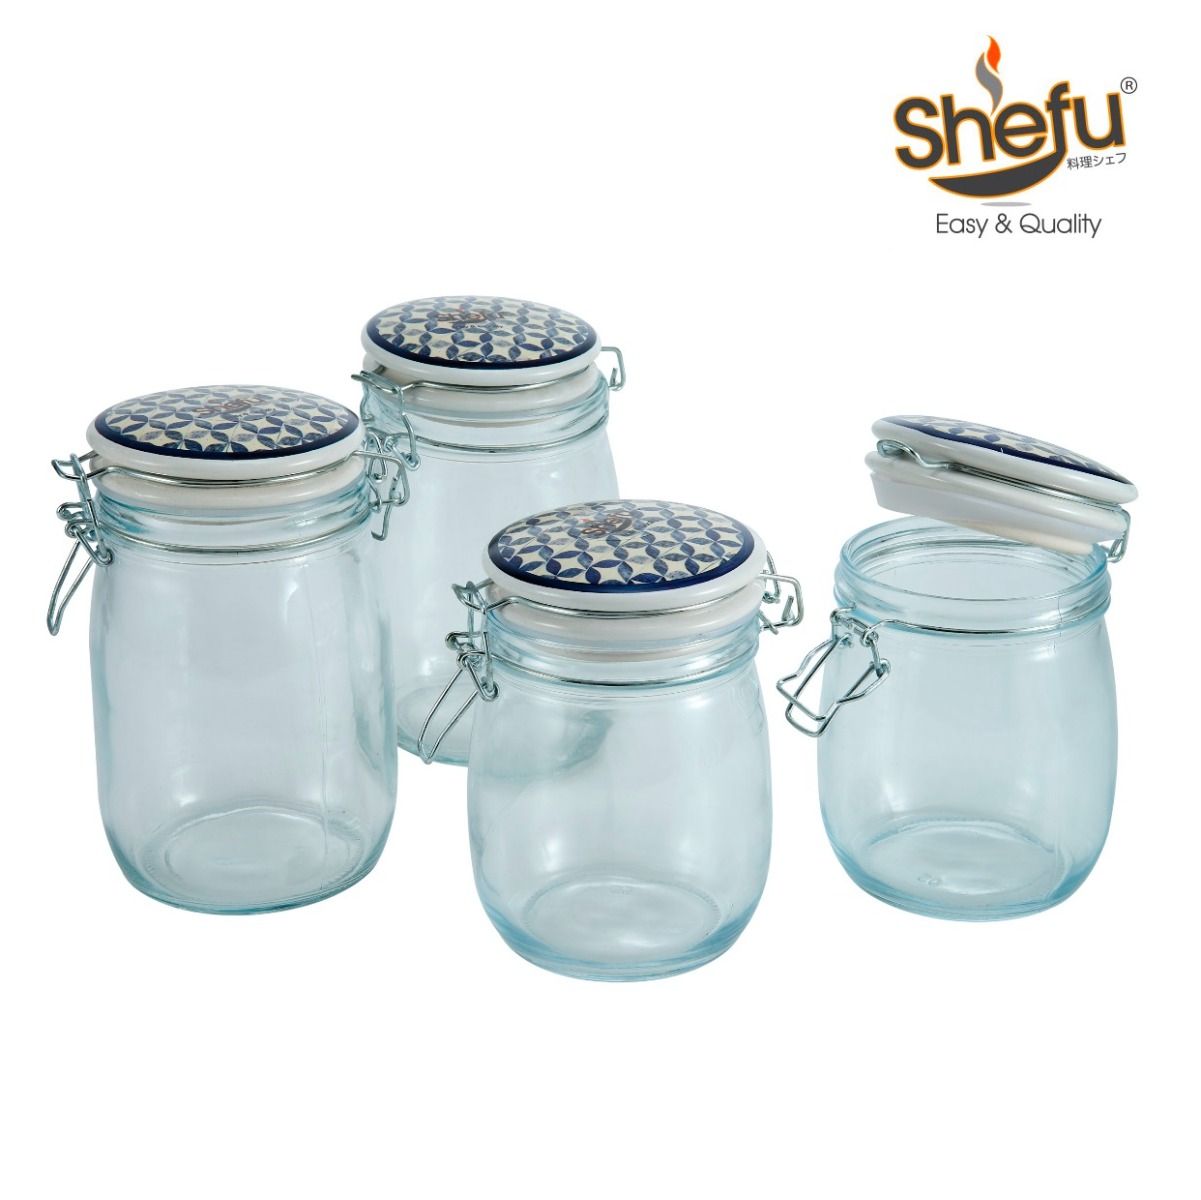 SHEFU 4-In-1 Glass Jar With Ceramic Lid Set 750ml/1000ml